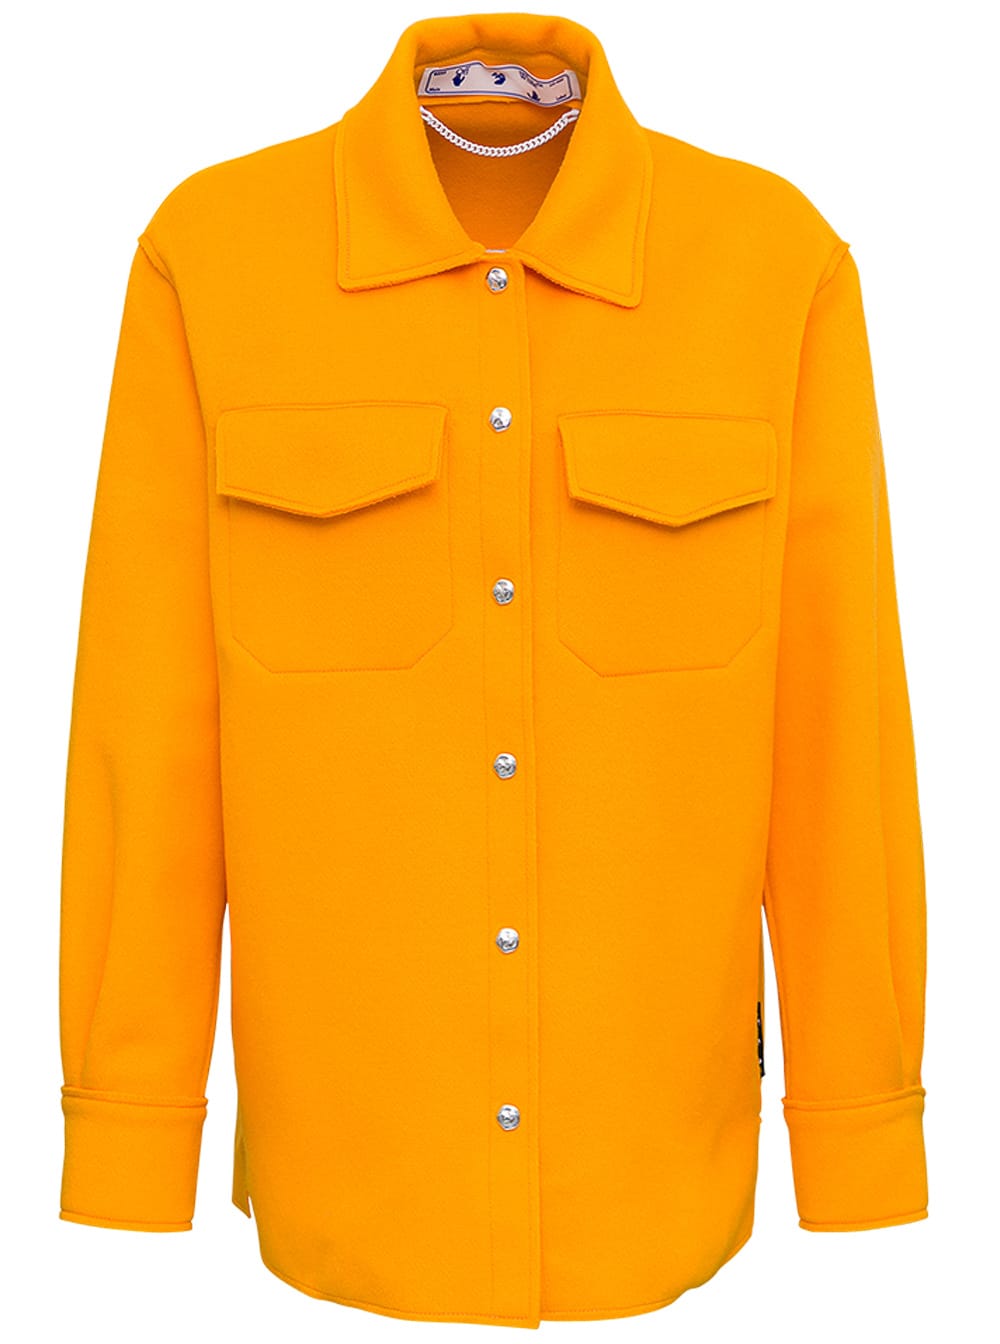 Off-White Orange Wool Jacket With Pockets